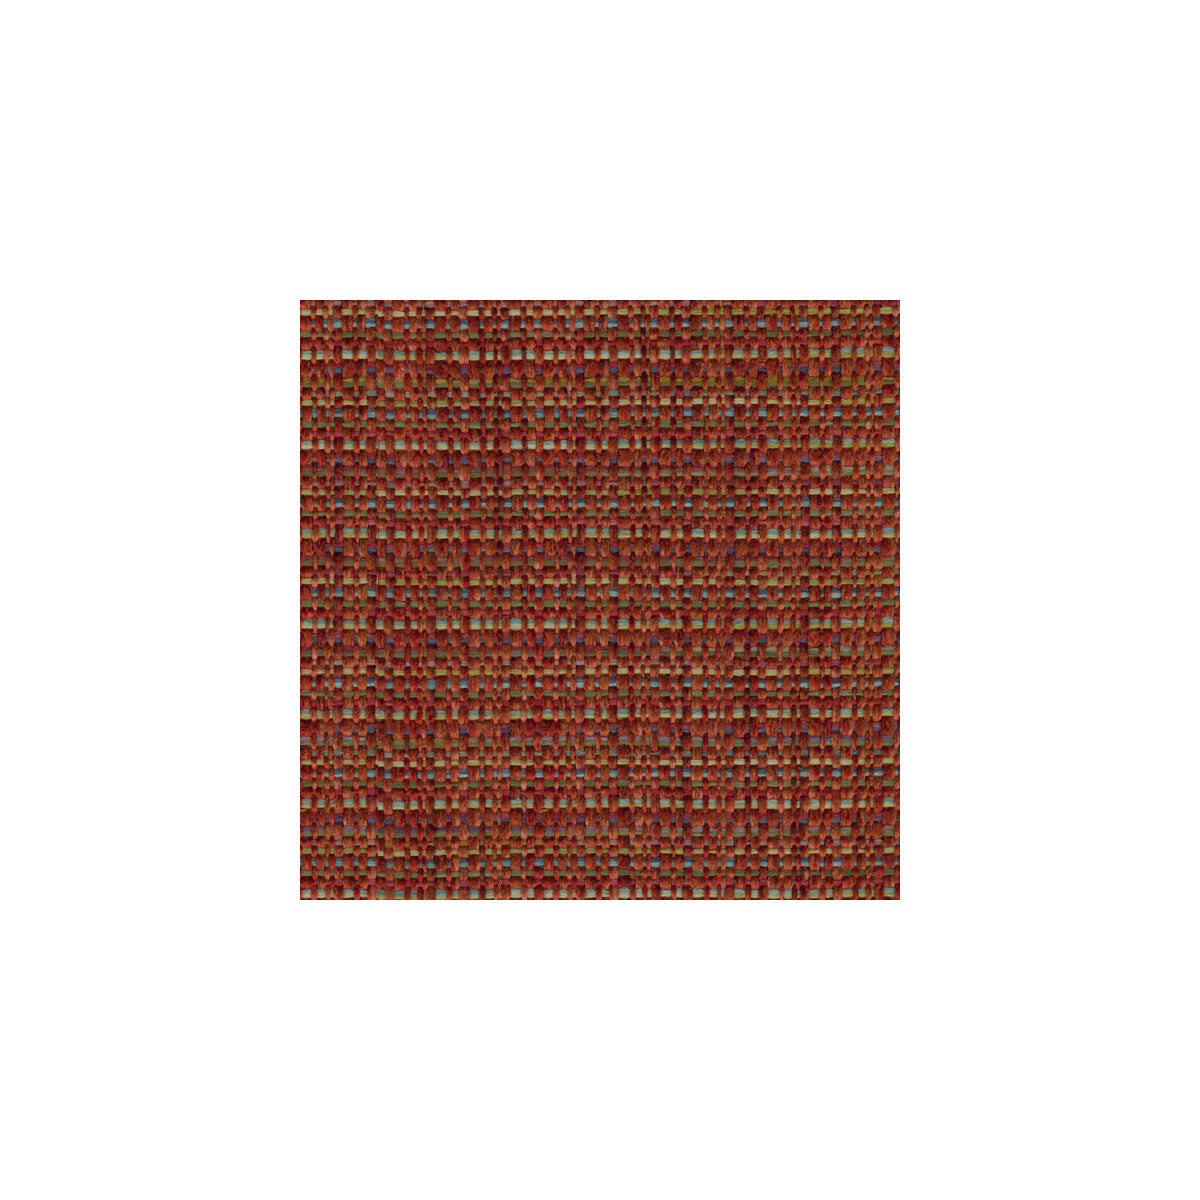 Kravet Smart fabric in 31757-915 color - pattern 31757.915.0 - by Kravet Smart